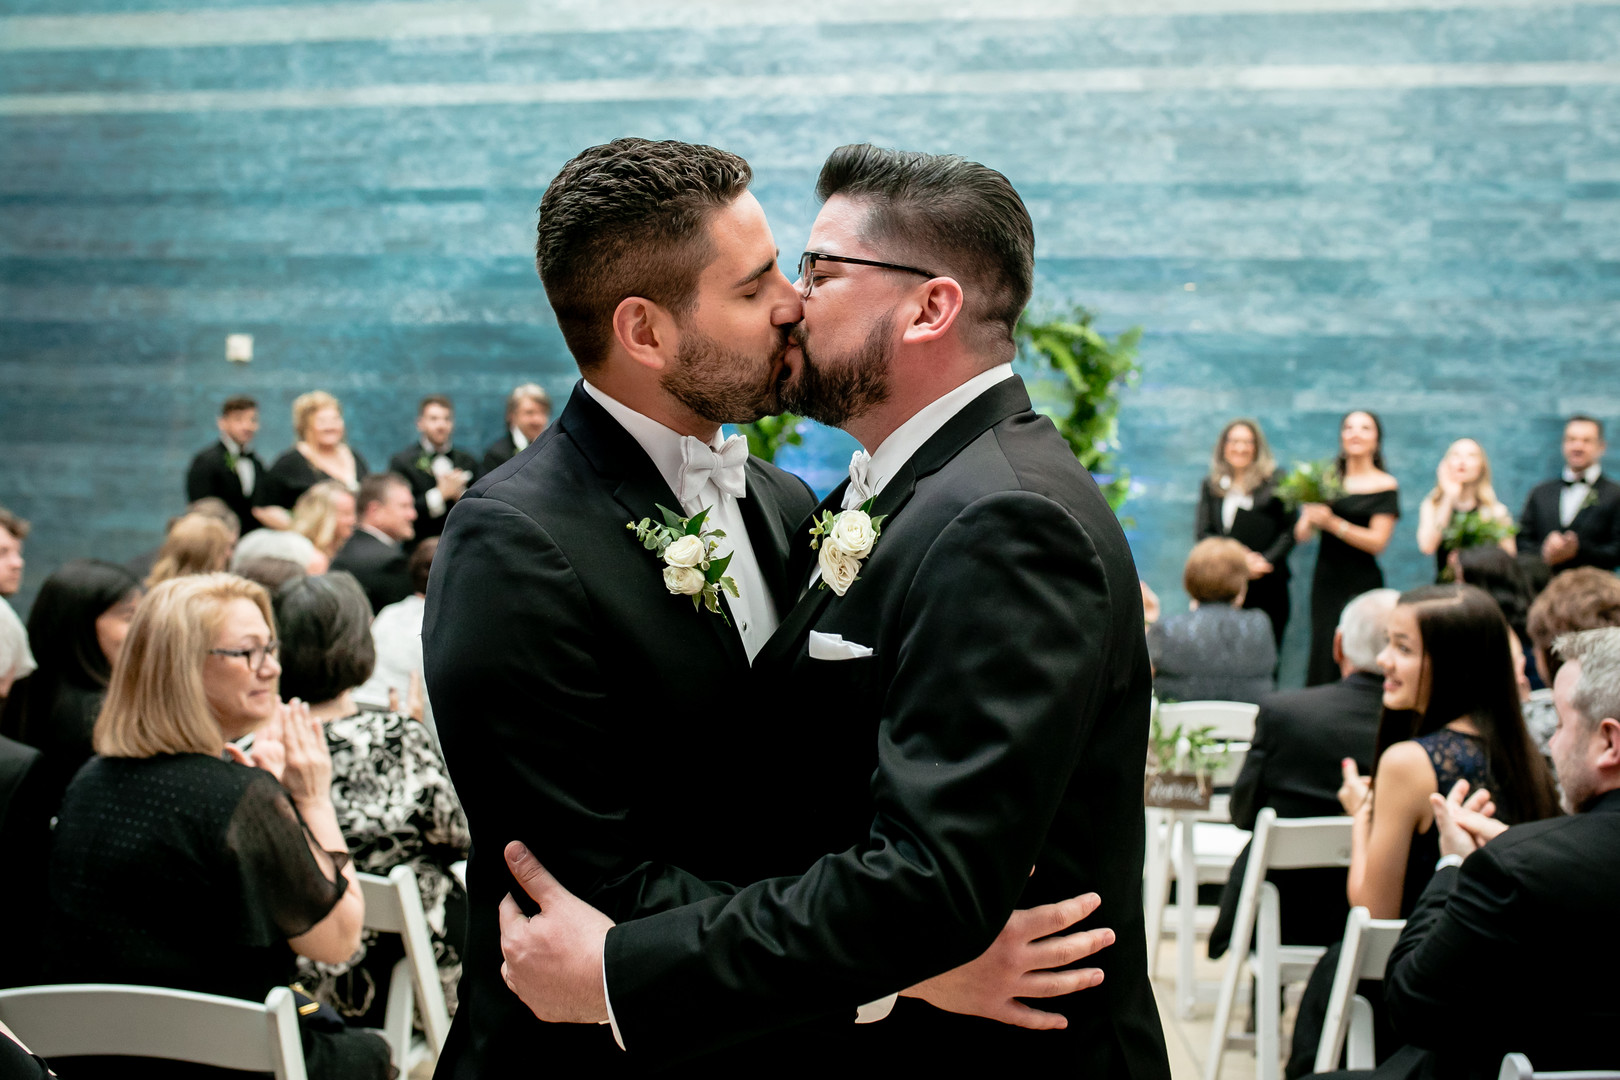 Black tie wedding at the Blanton Museum in Austin, Texas LGBTQ+ weddings two grooms luxury elegant kiss